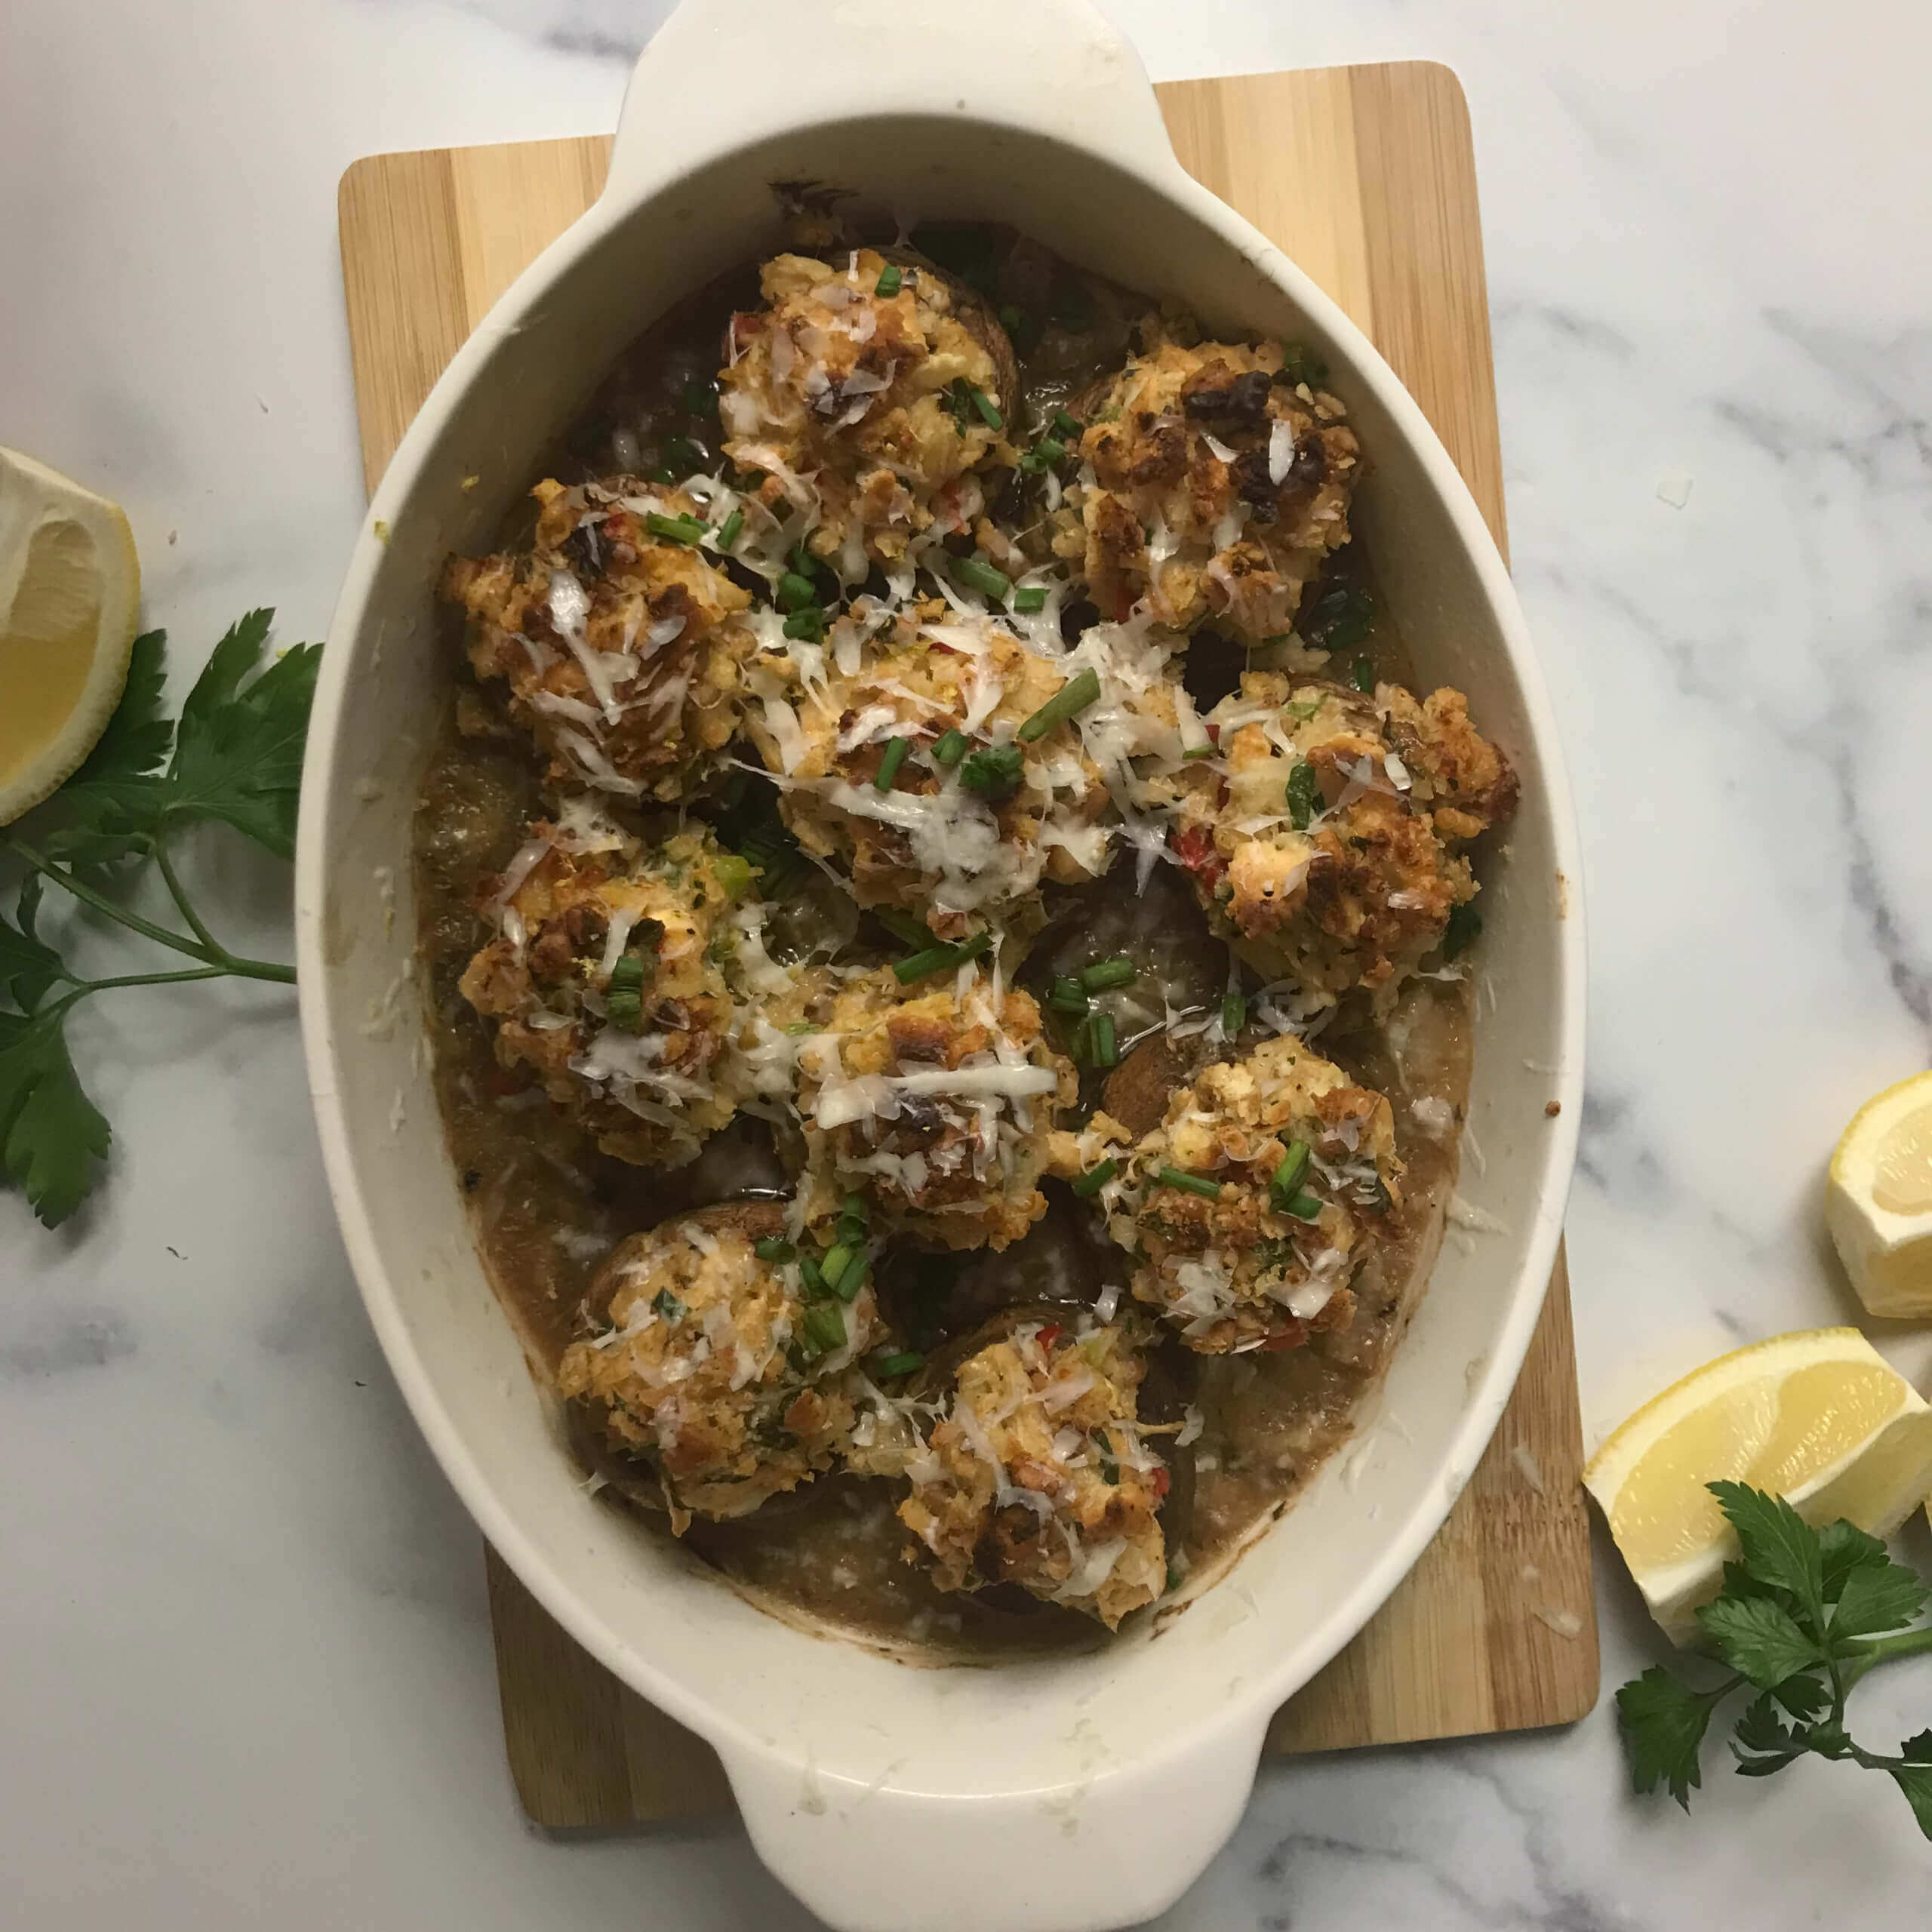 Crab & Shrimp Stuffed Mushrooms | My Curated Tastes